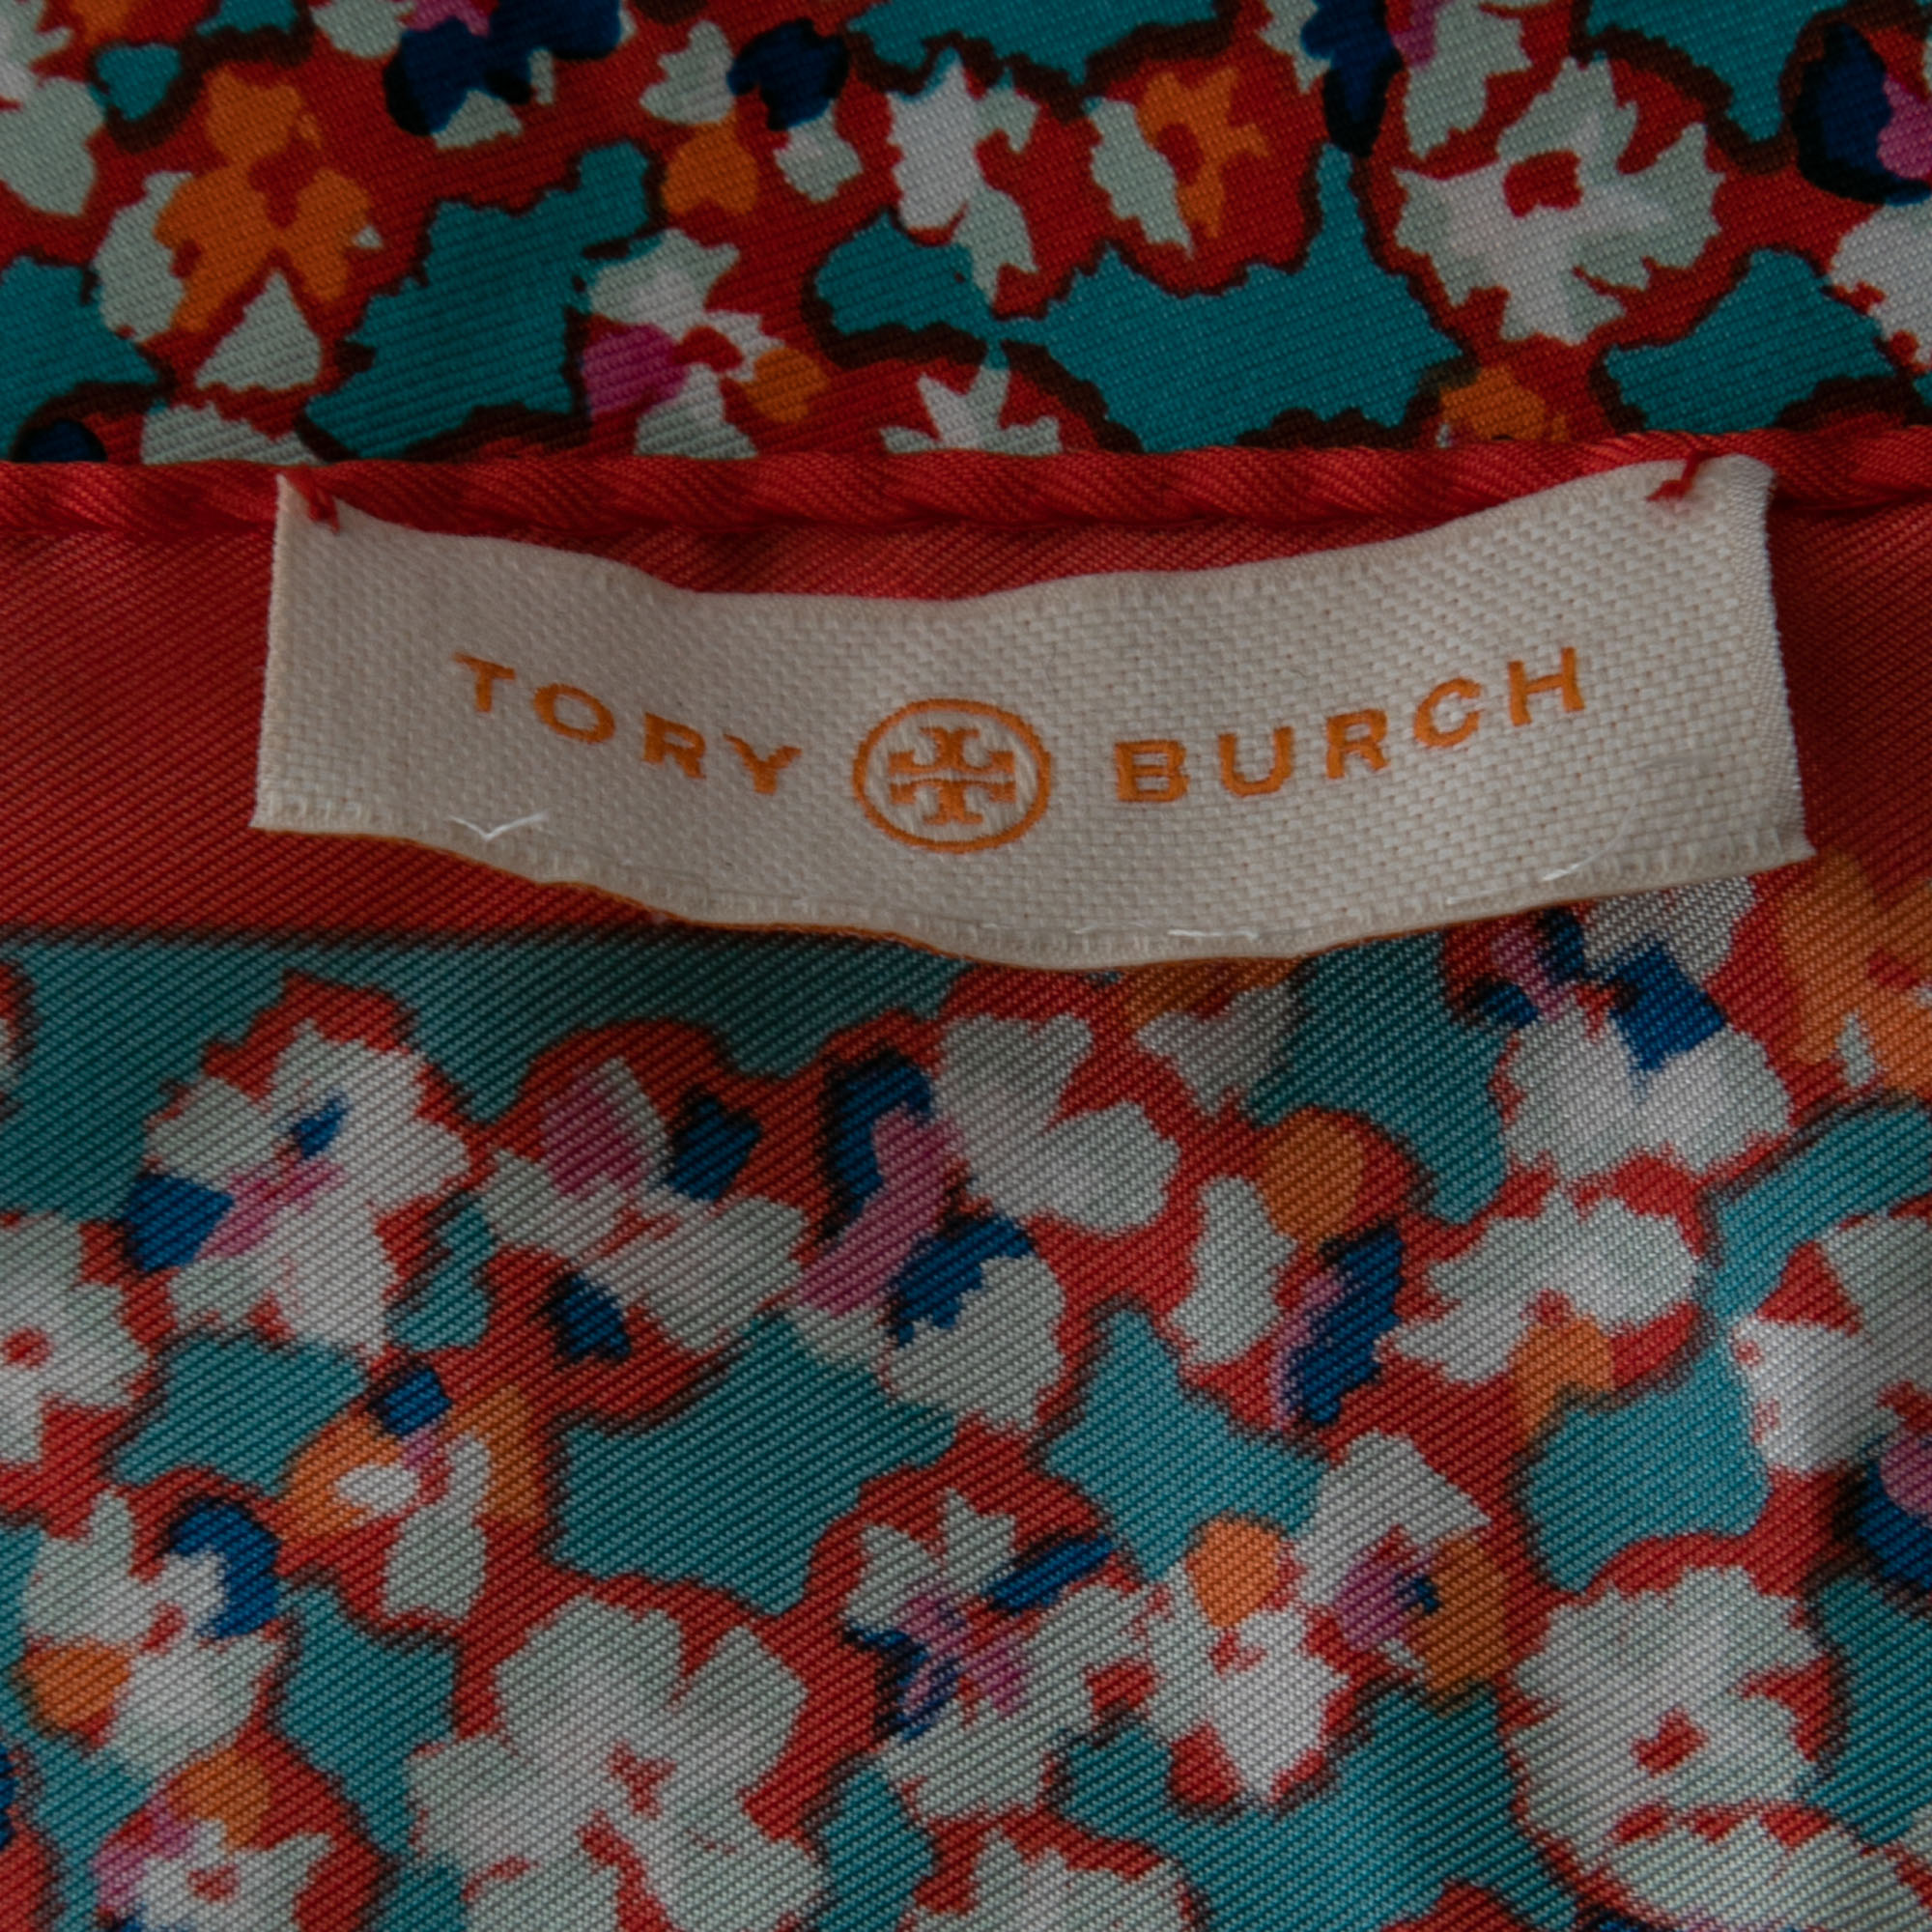 Tory Burch Red Floral Print Silk Scarf